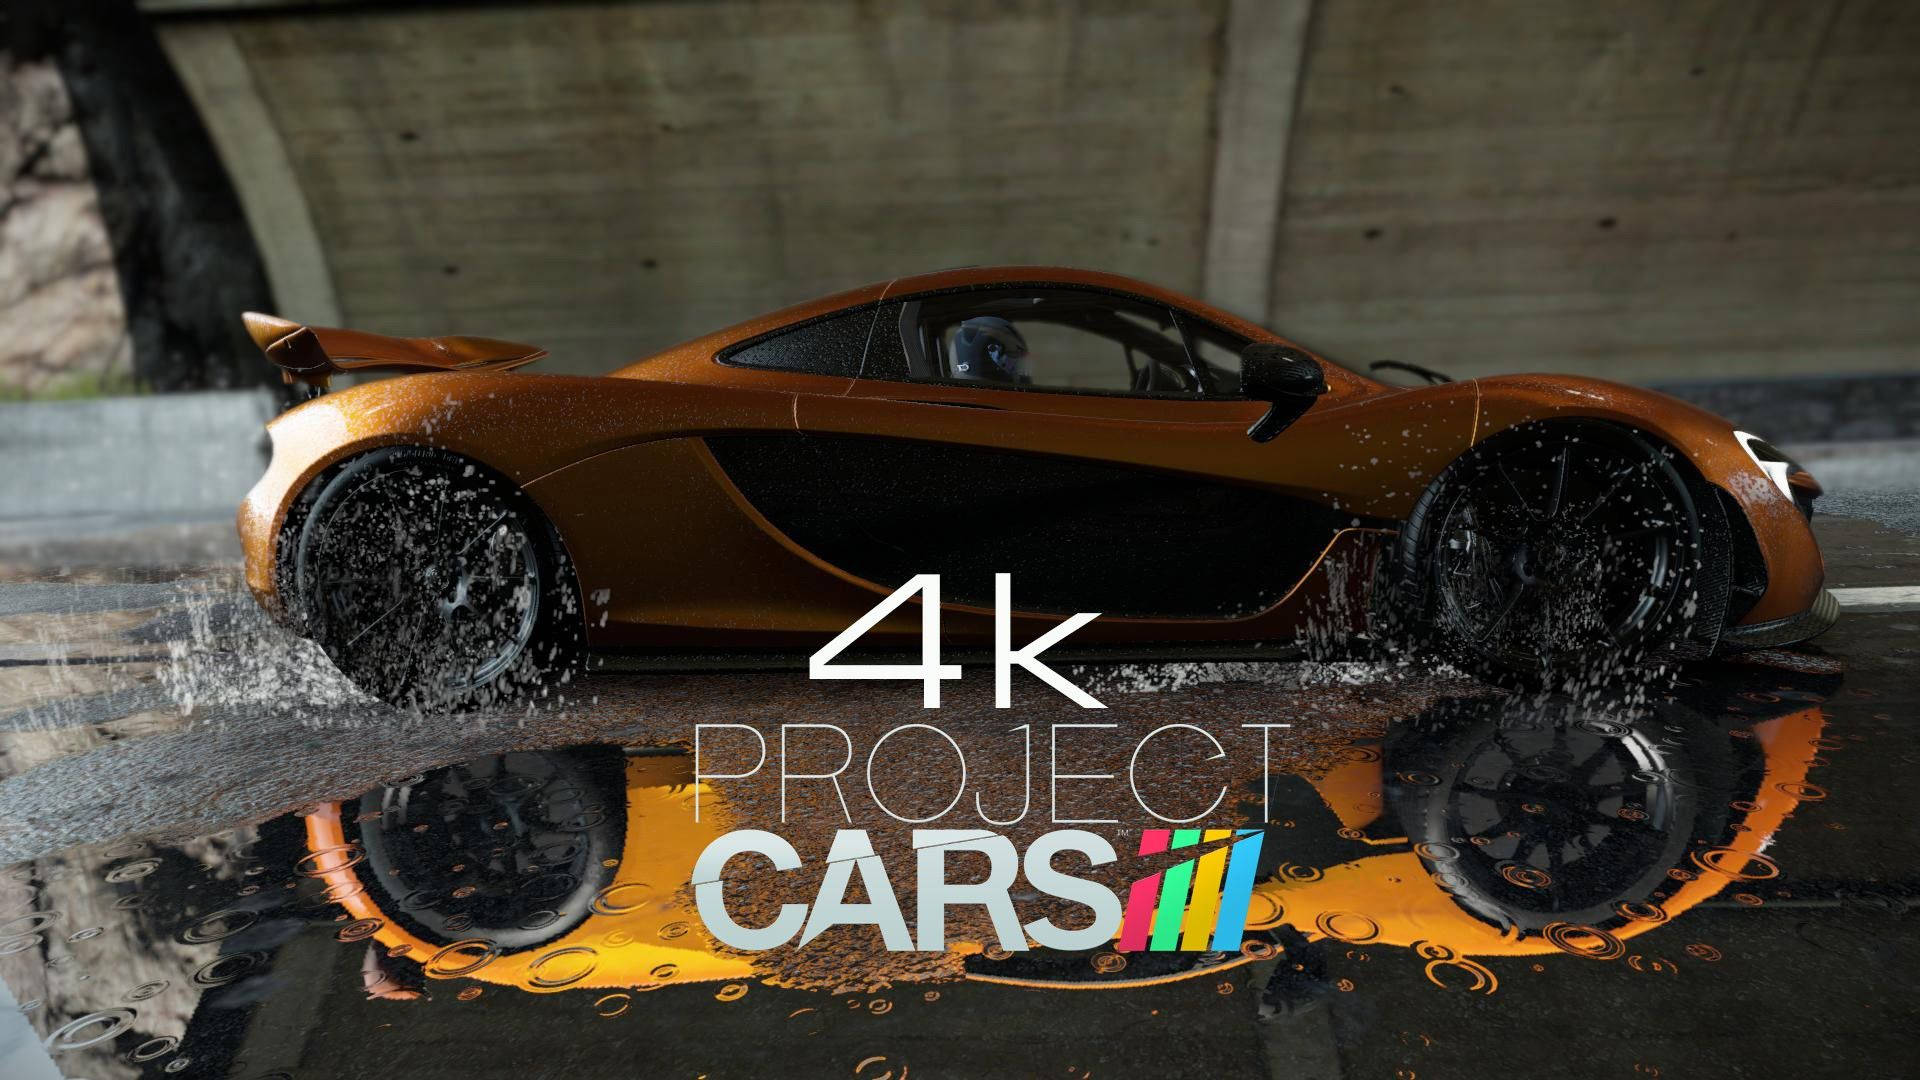 Project Cars 4k Wallpaper